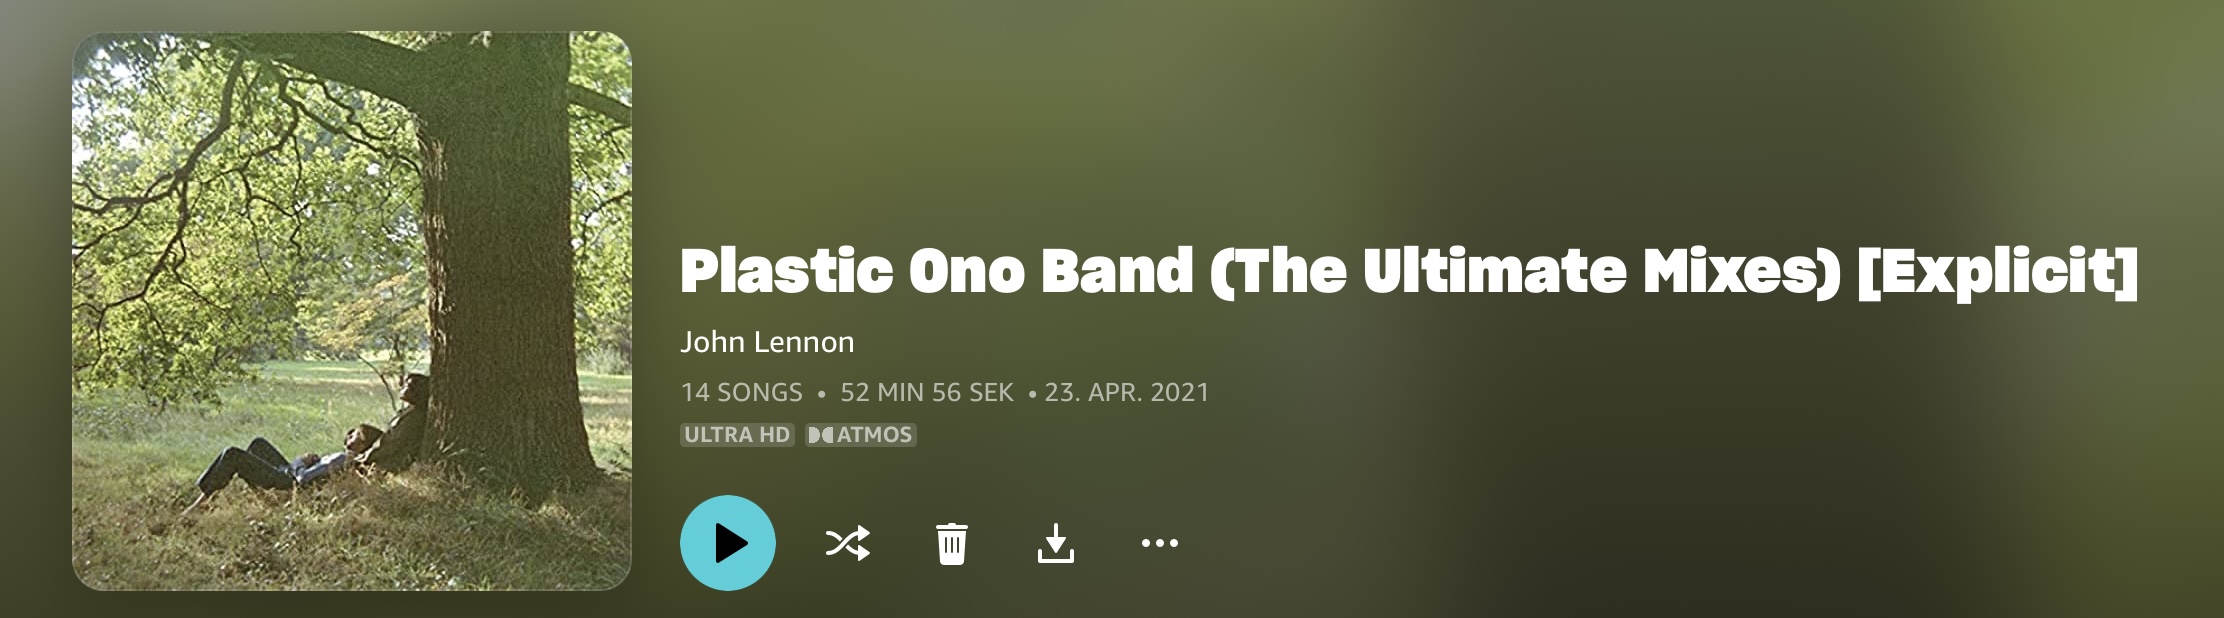 John Lennon Plastic Ono Band Dolby Atmos